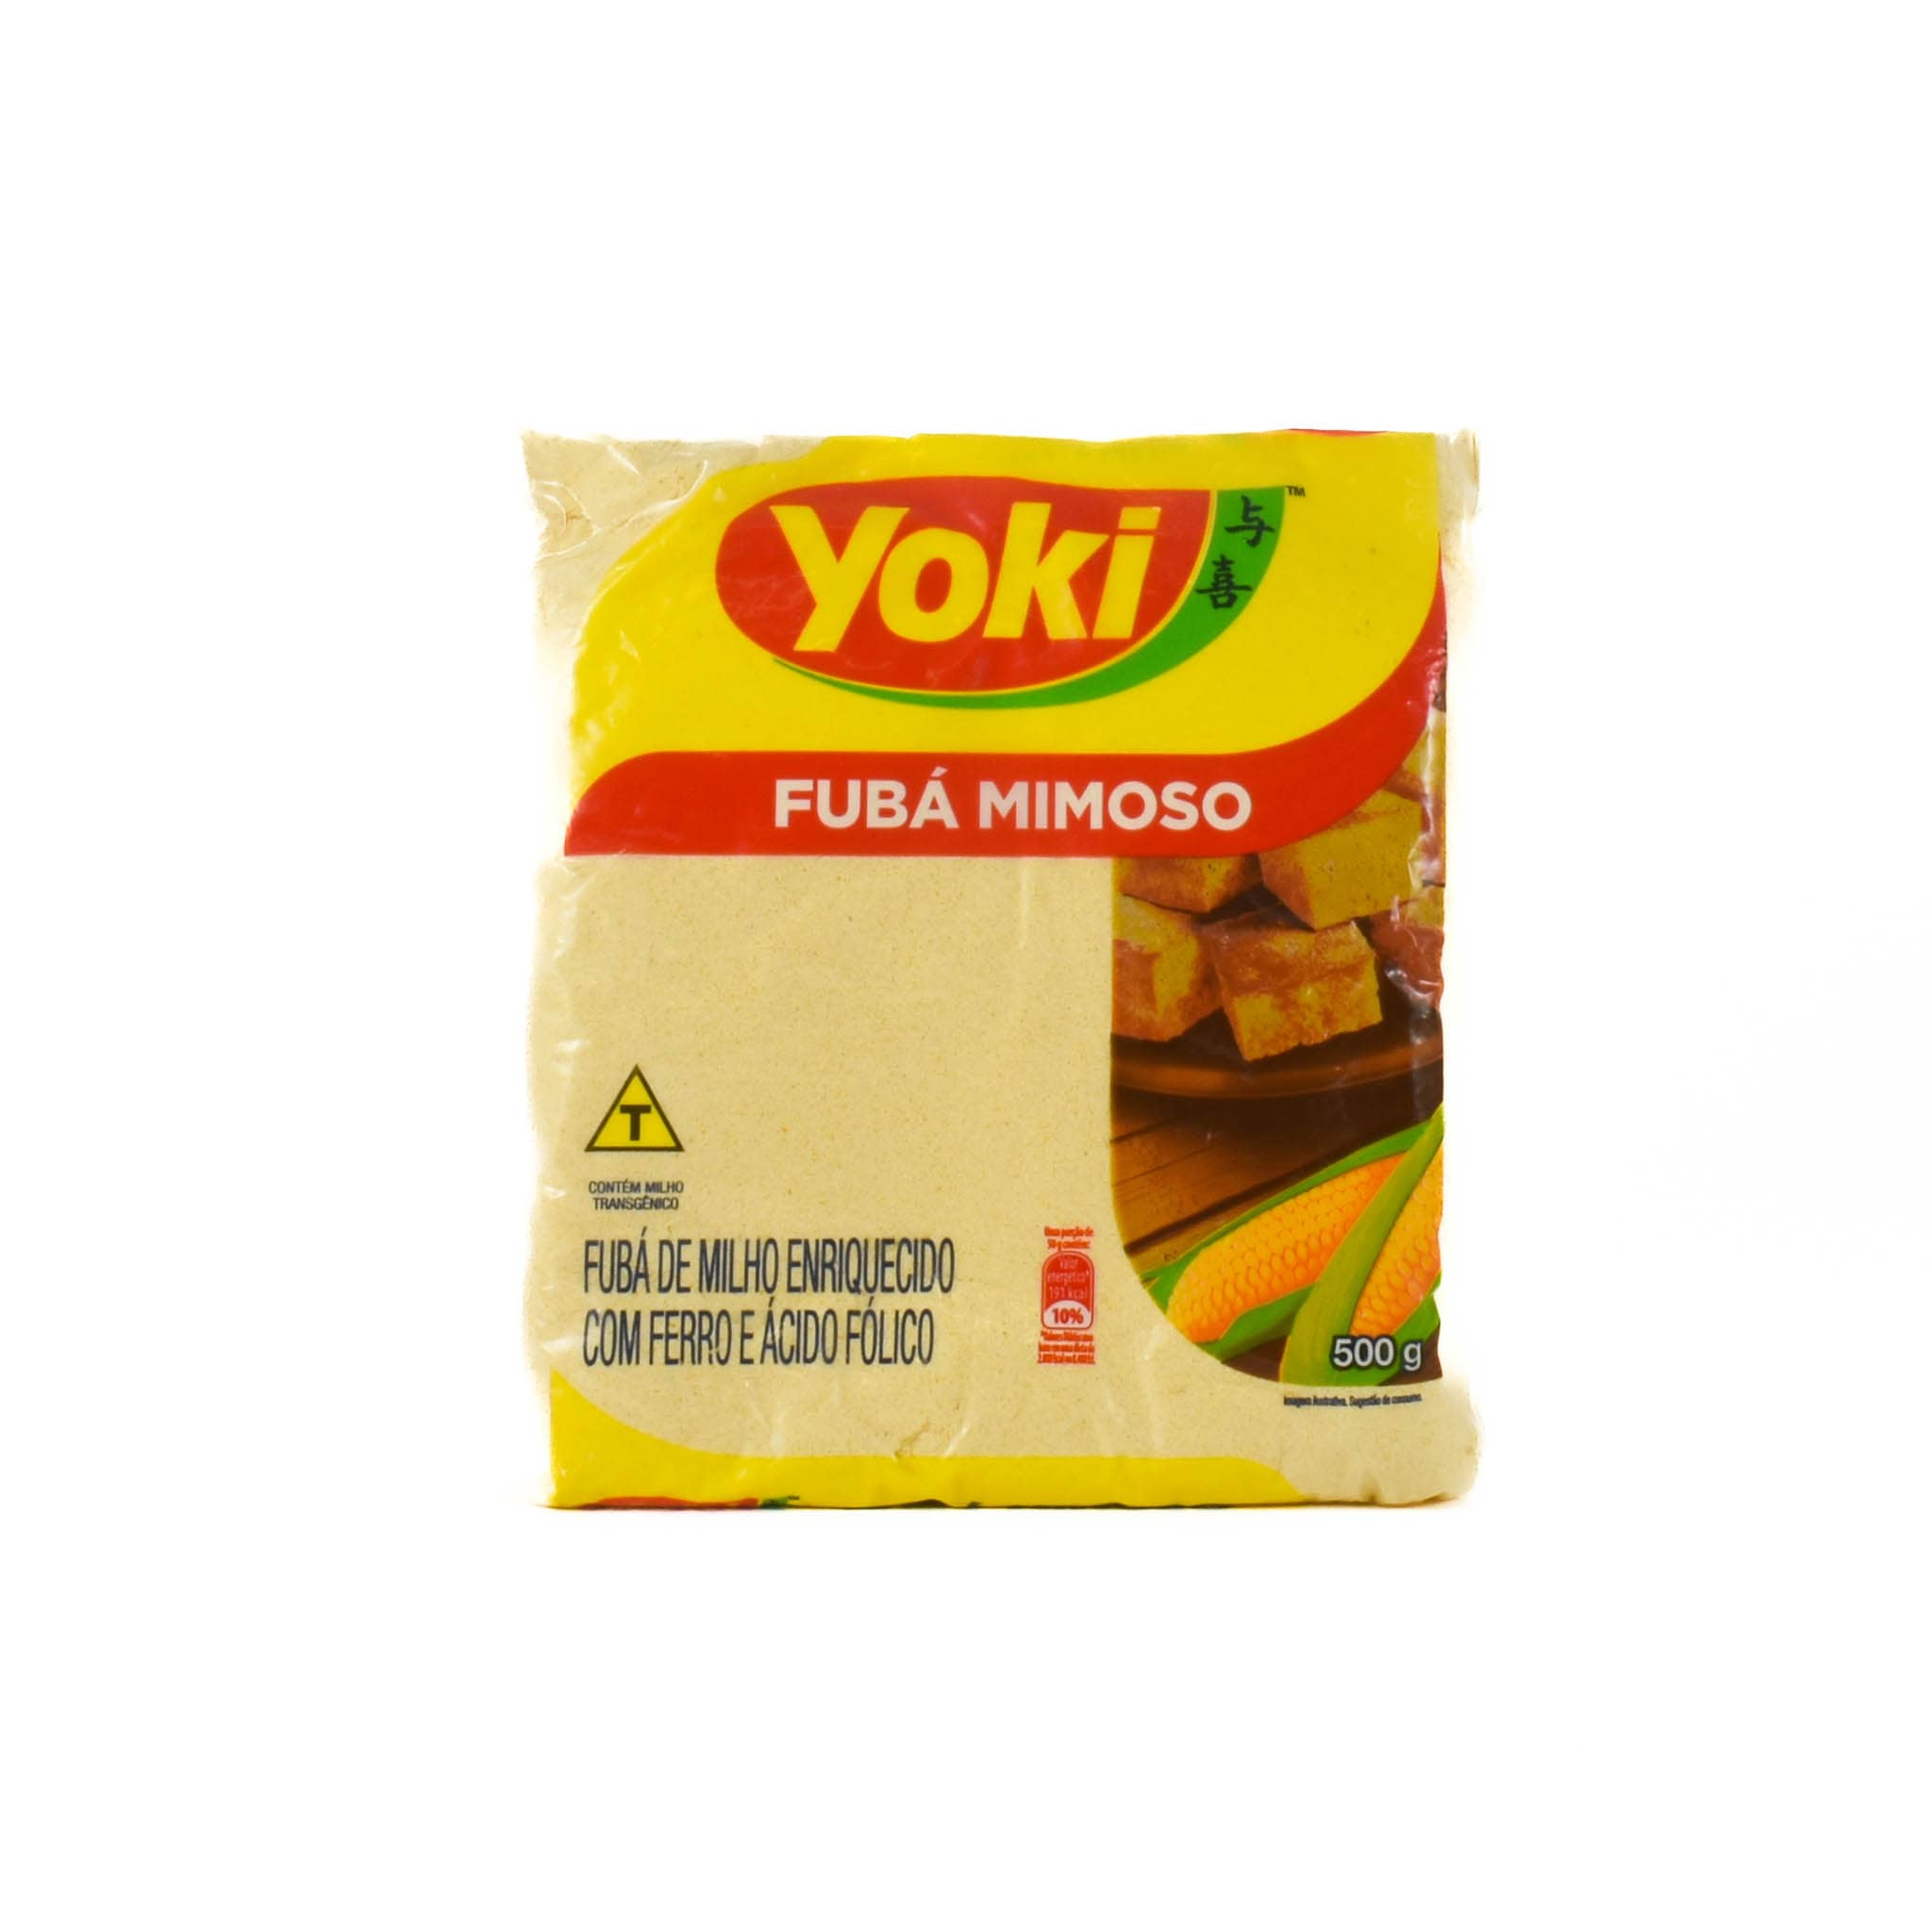 Yoki Fuba Mimoso, Sweet Corn Flour 500g